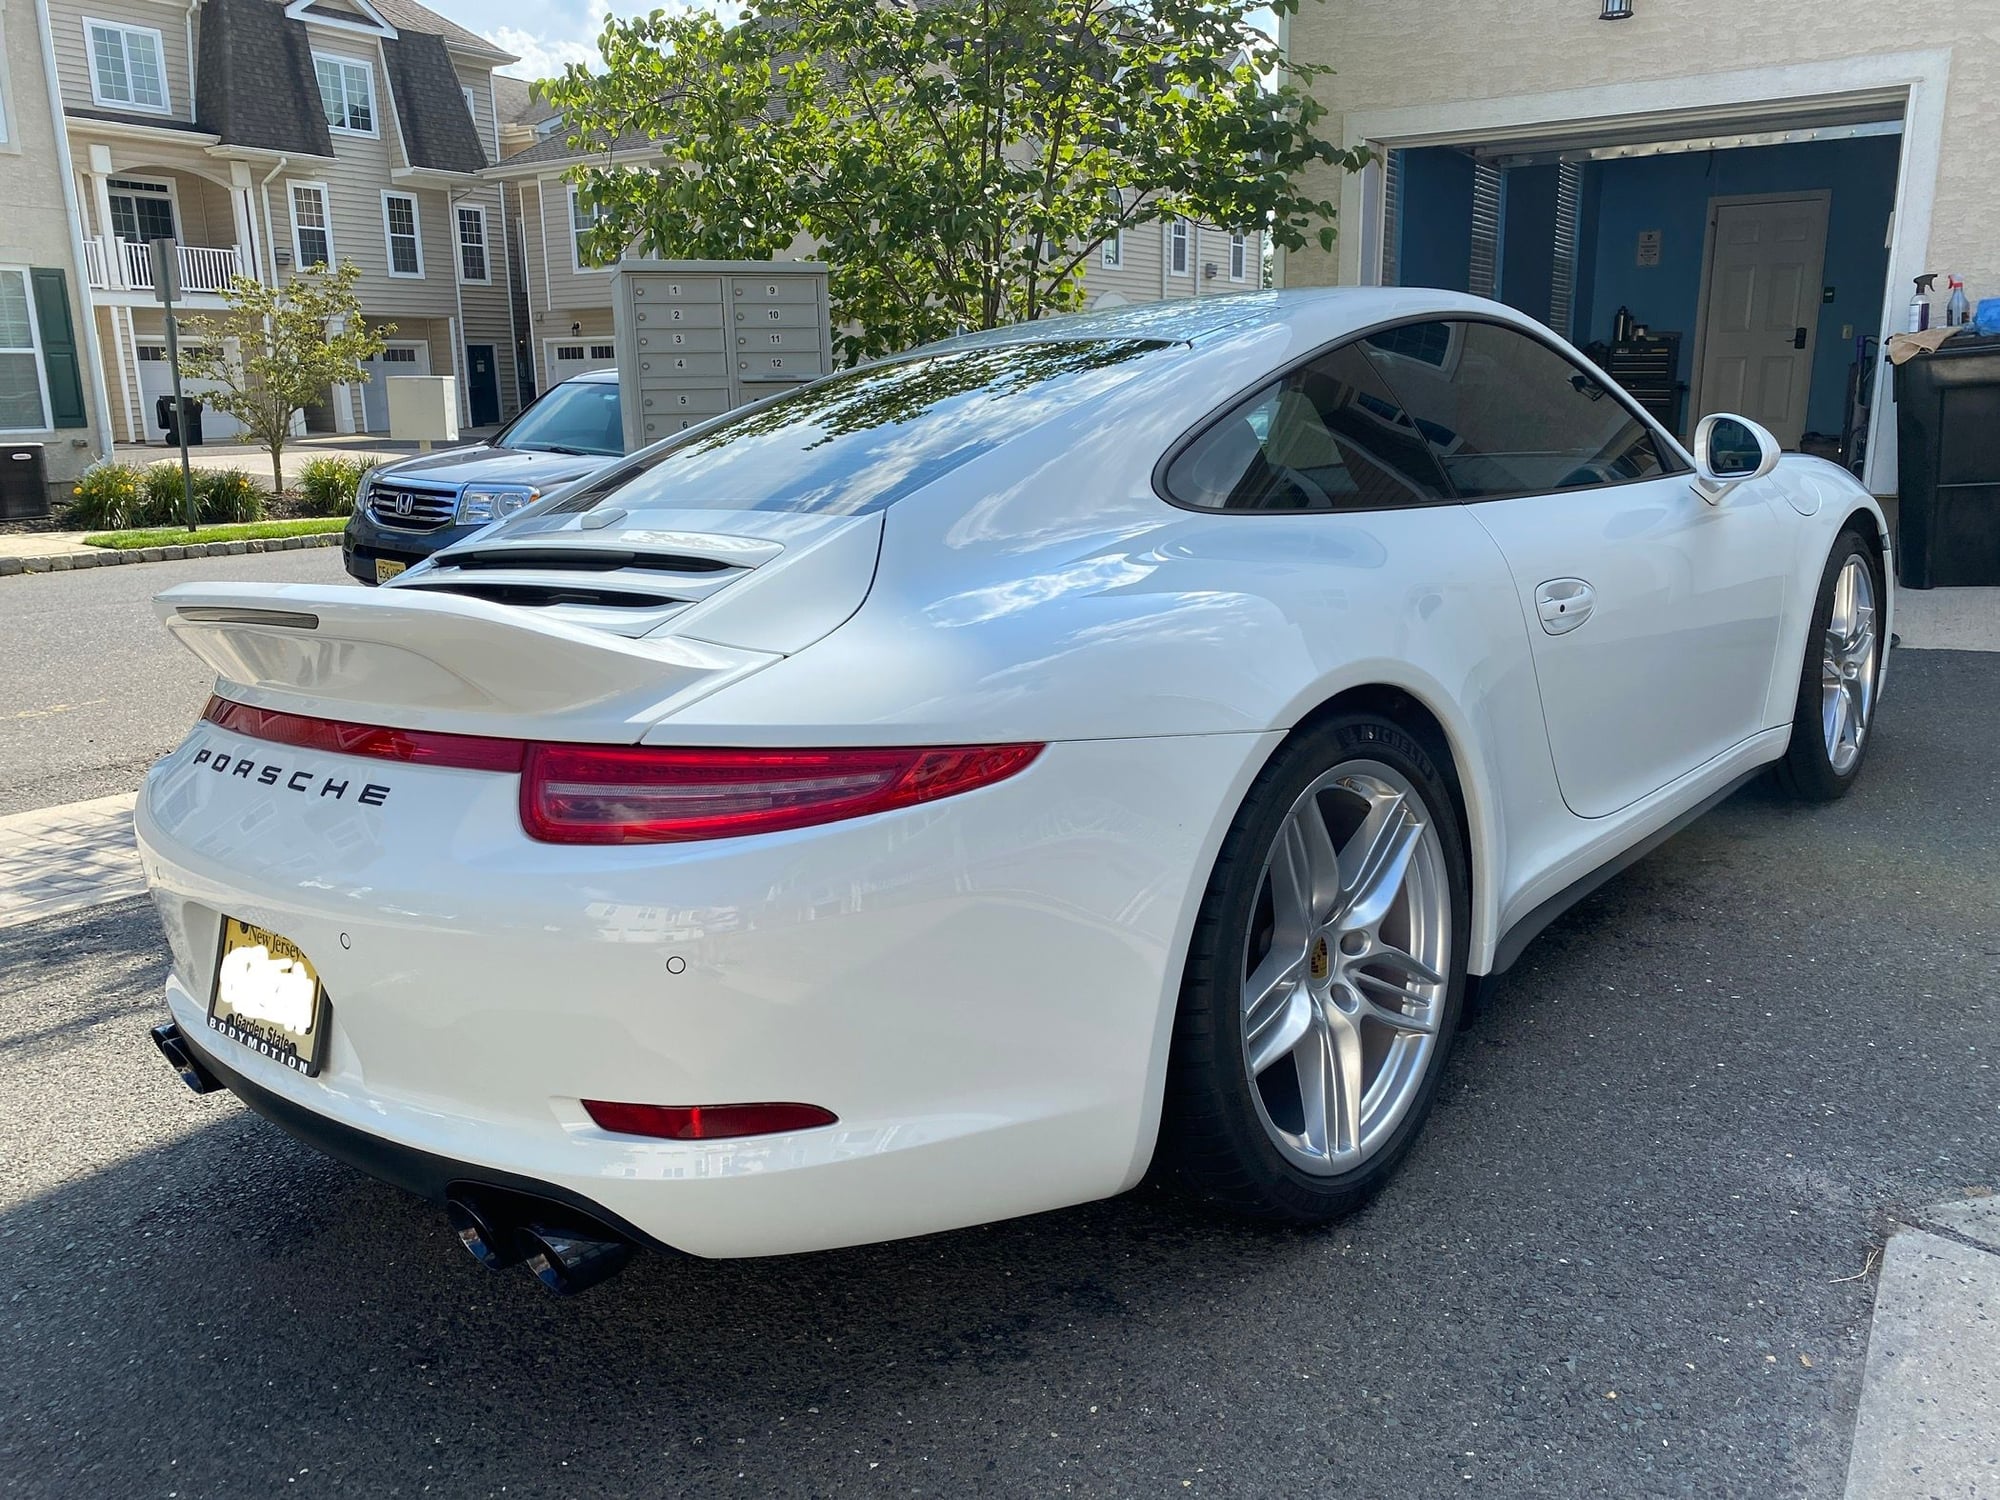 2015 Porsche 911 - 2015 Porsche 911 C4S - SportDesign Ducktail Carrera White CLEAN $134K MSRP - Used - VIN WP0AB2A96FS125895 - 15,593 Miles - 6 cyl - 4WD - Automatic - Coupe - White - Boca Raton, FL 33428, United States